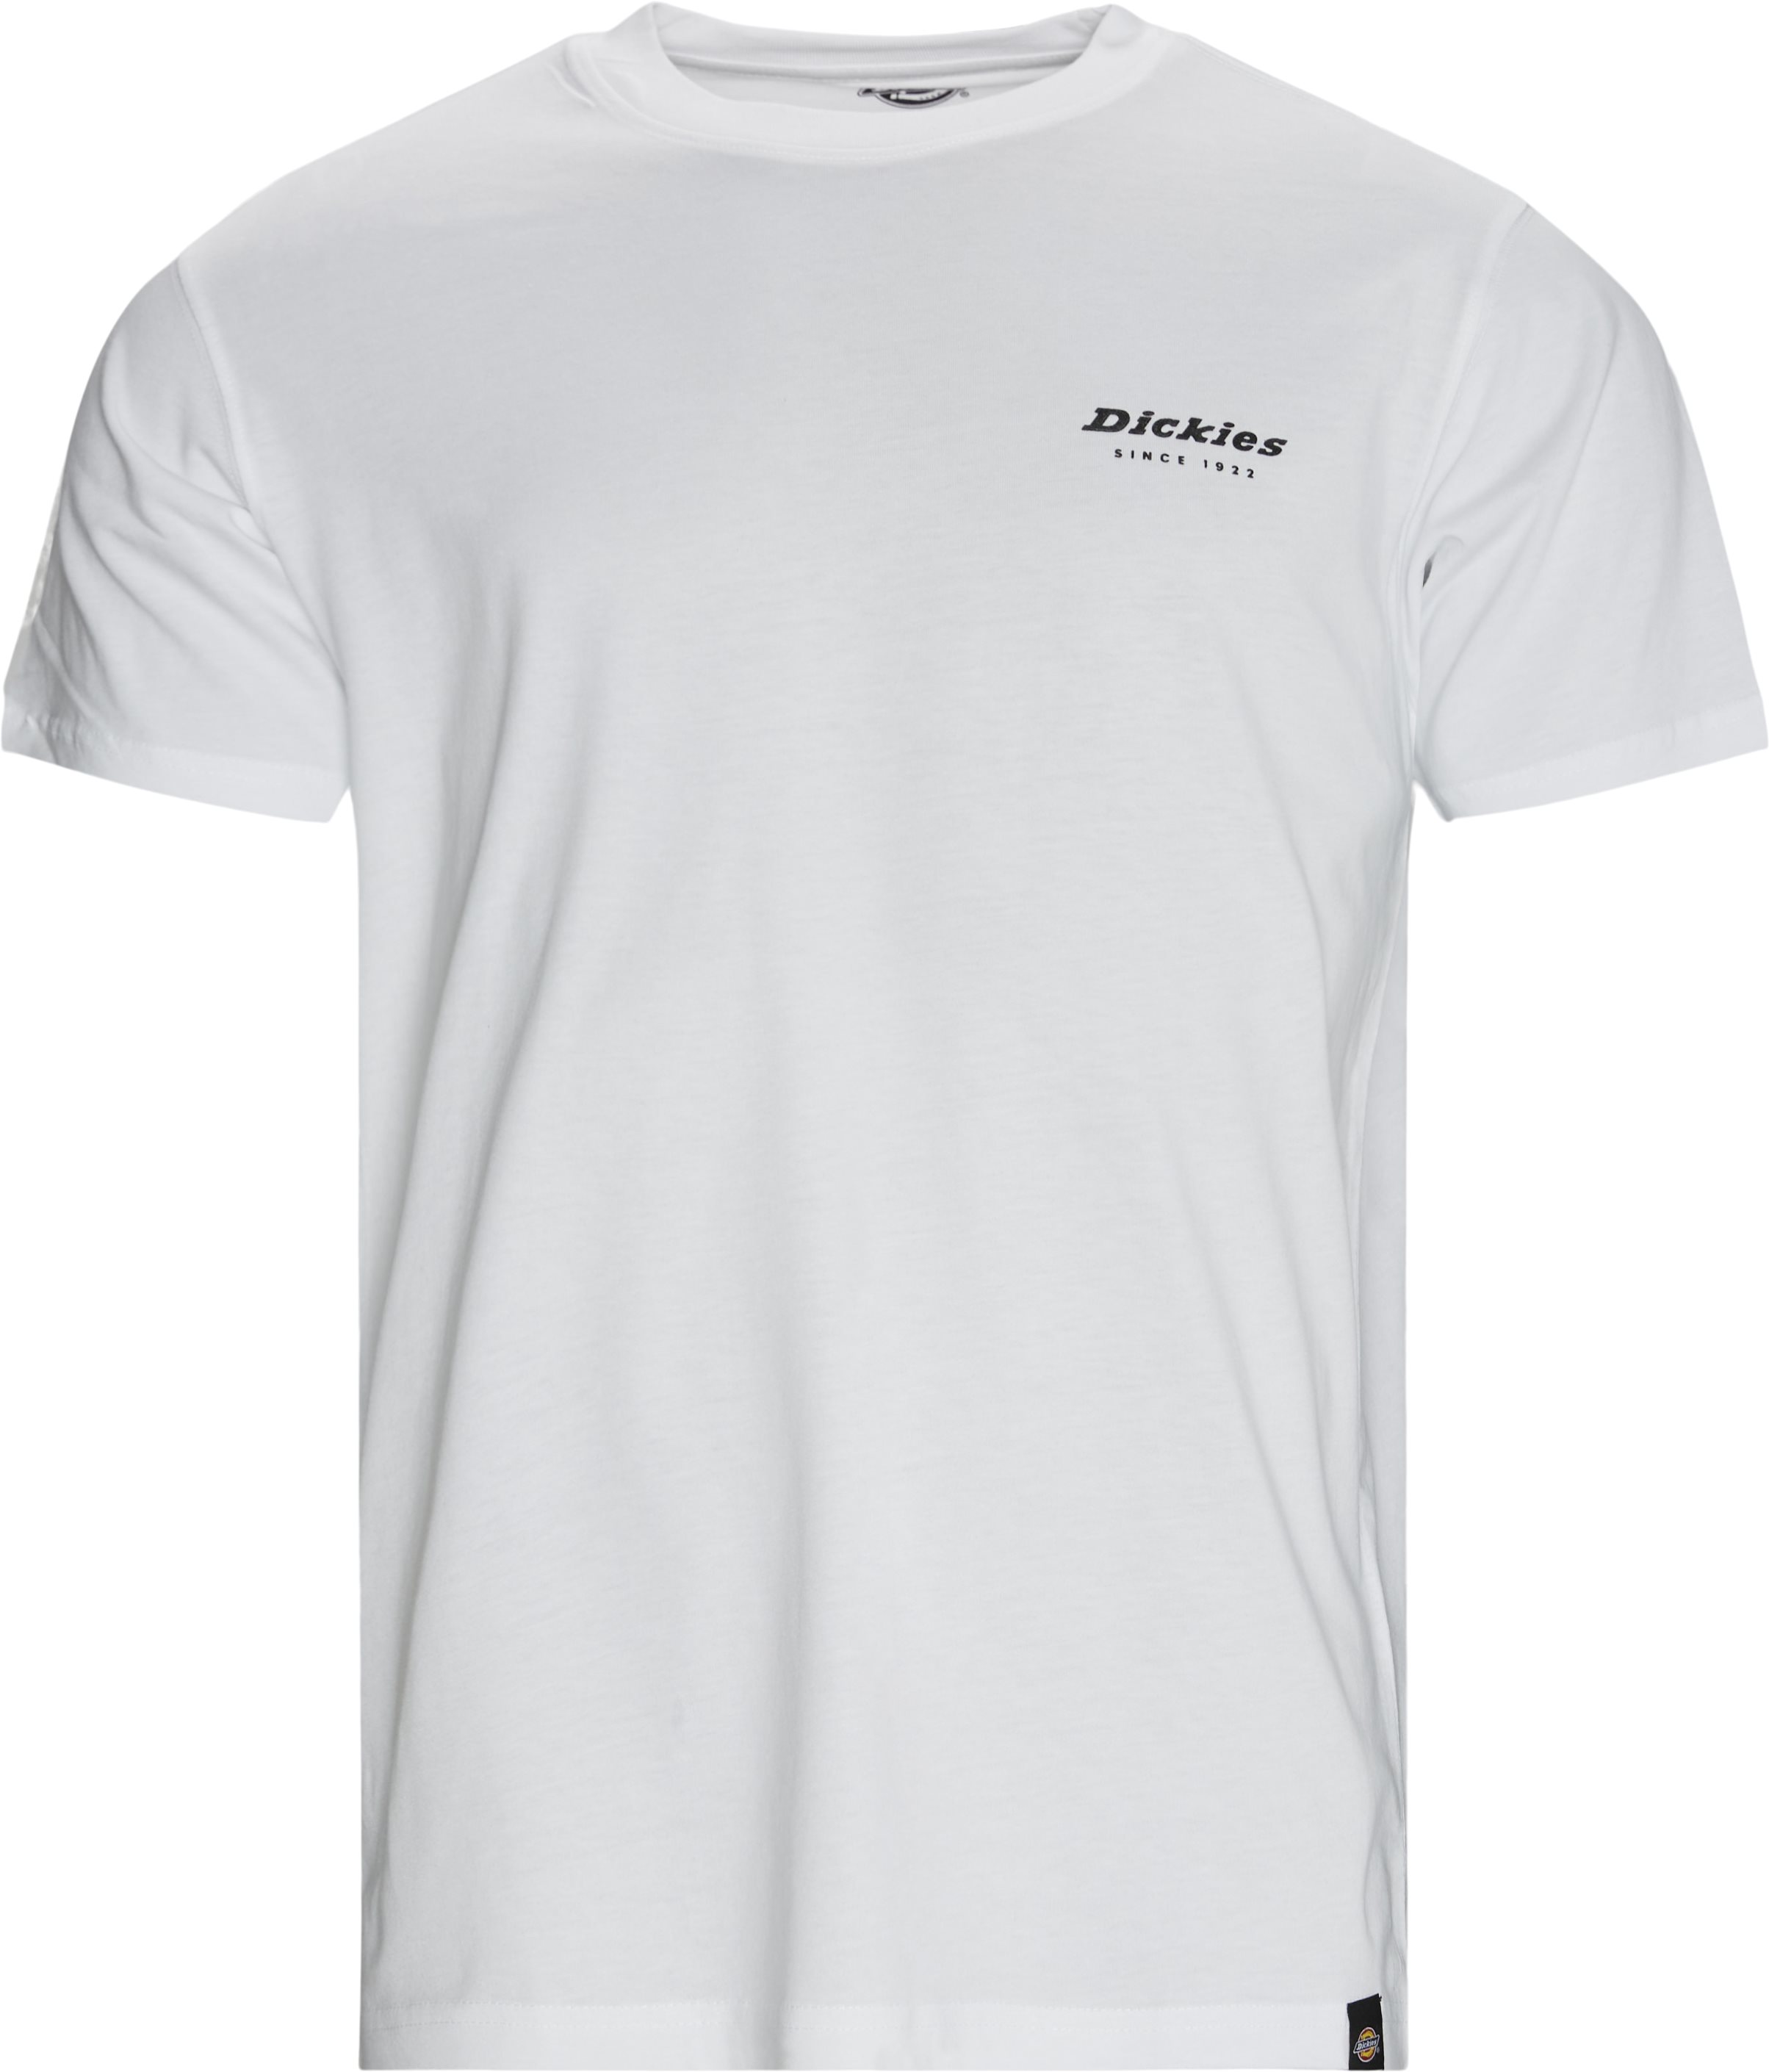 QUAMBA BOX T-shirt - T-shirts - Regular fit - White